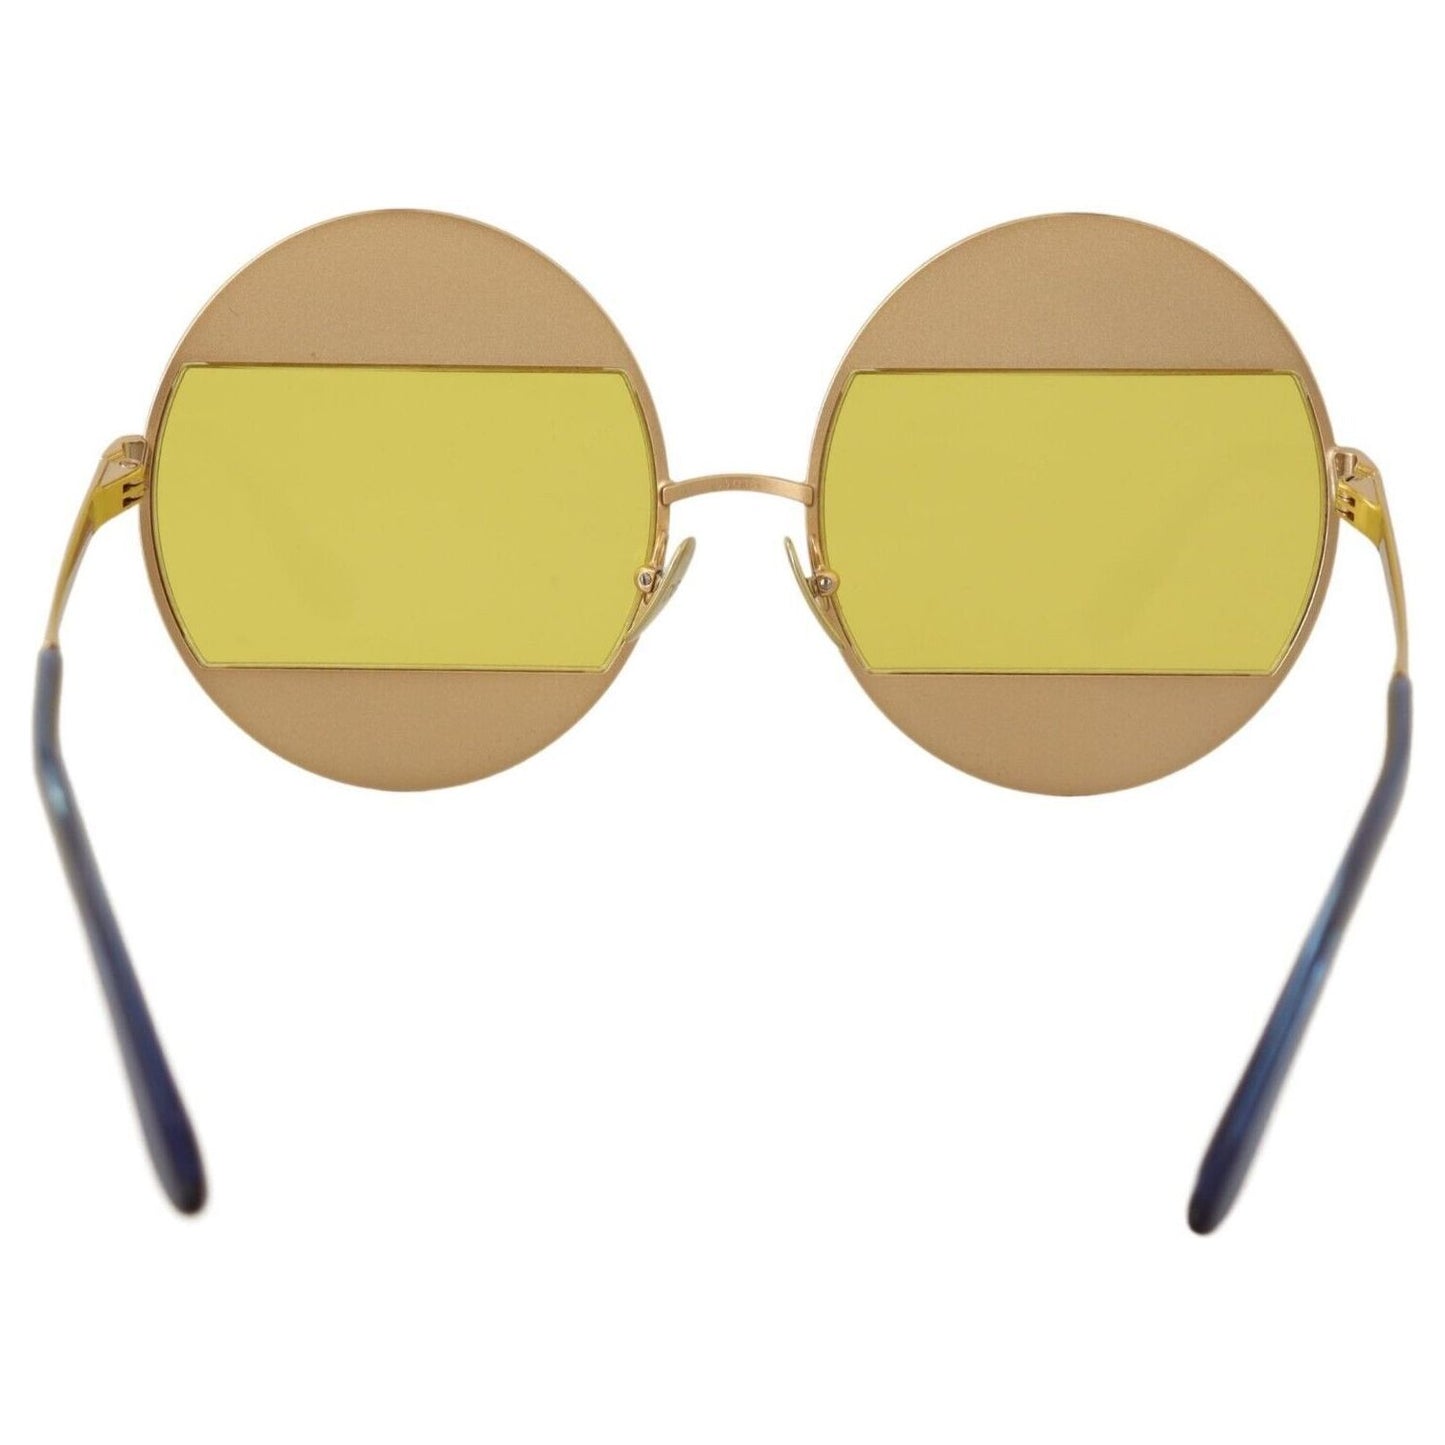 Dolce & Gabbana Crystal Embellished Oval Sunglasses WOMAN SUNGLASSES gold-oval-metal-crystals-shades-sunglasses